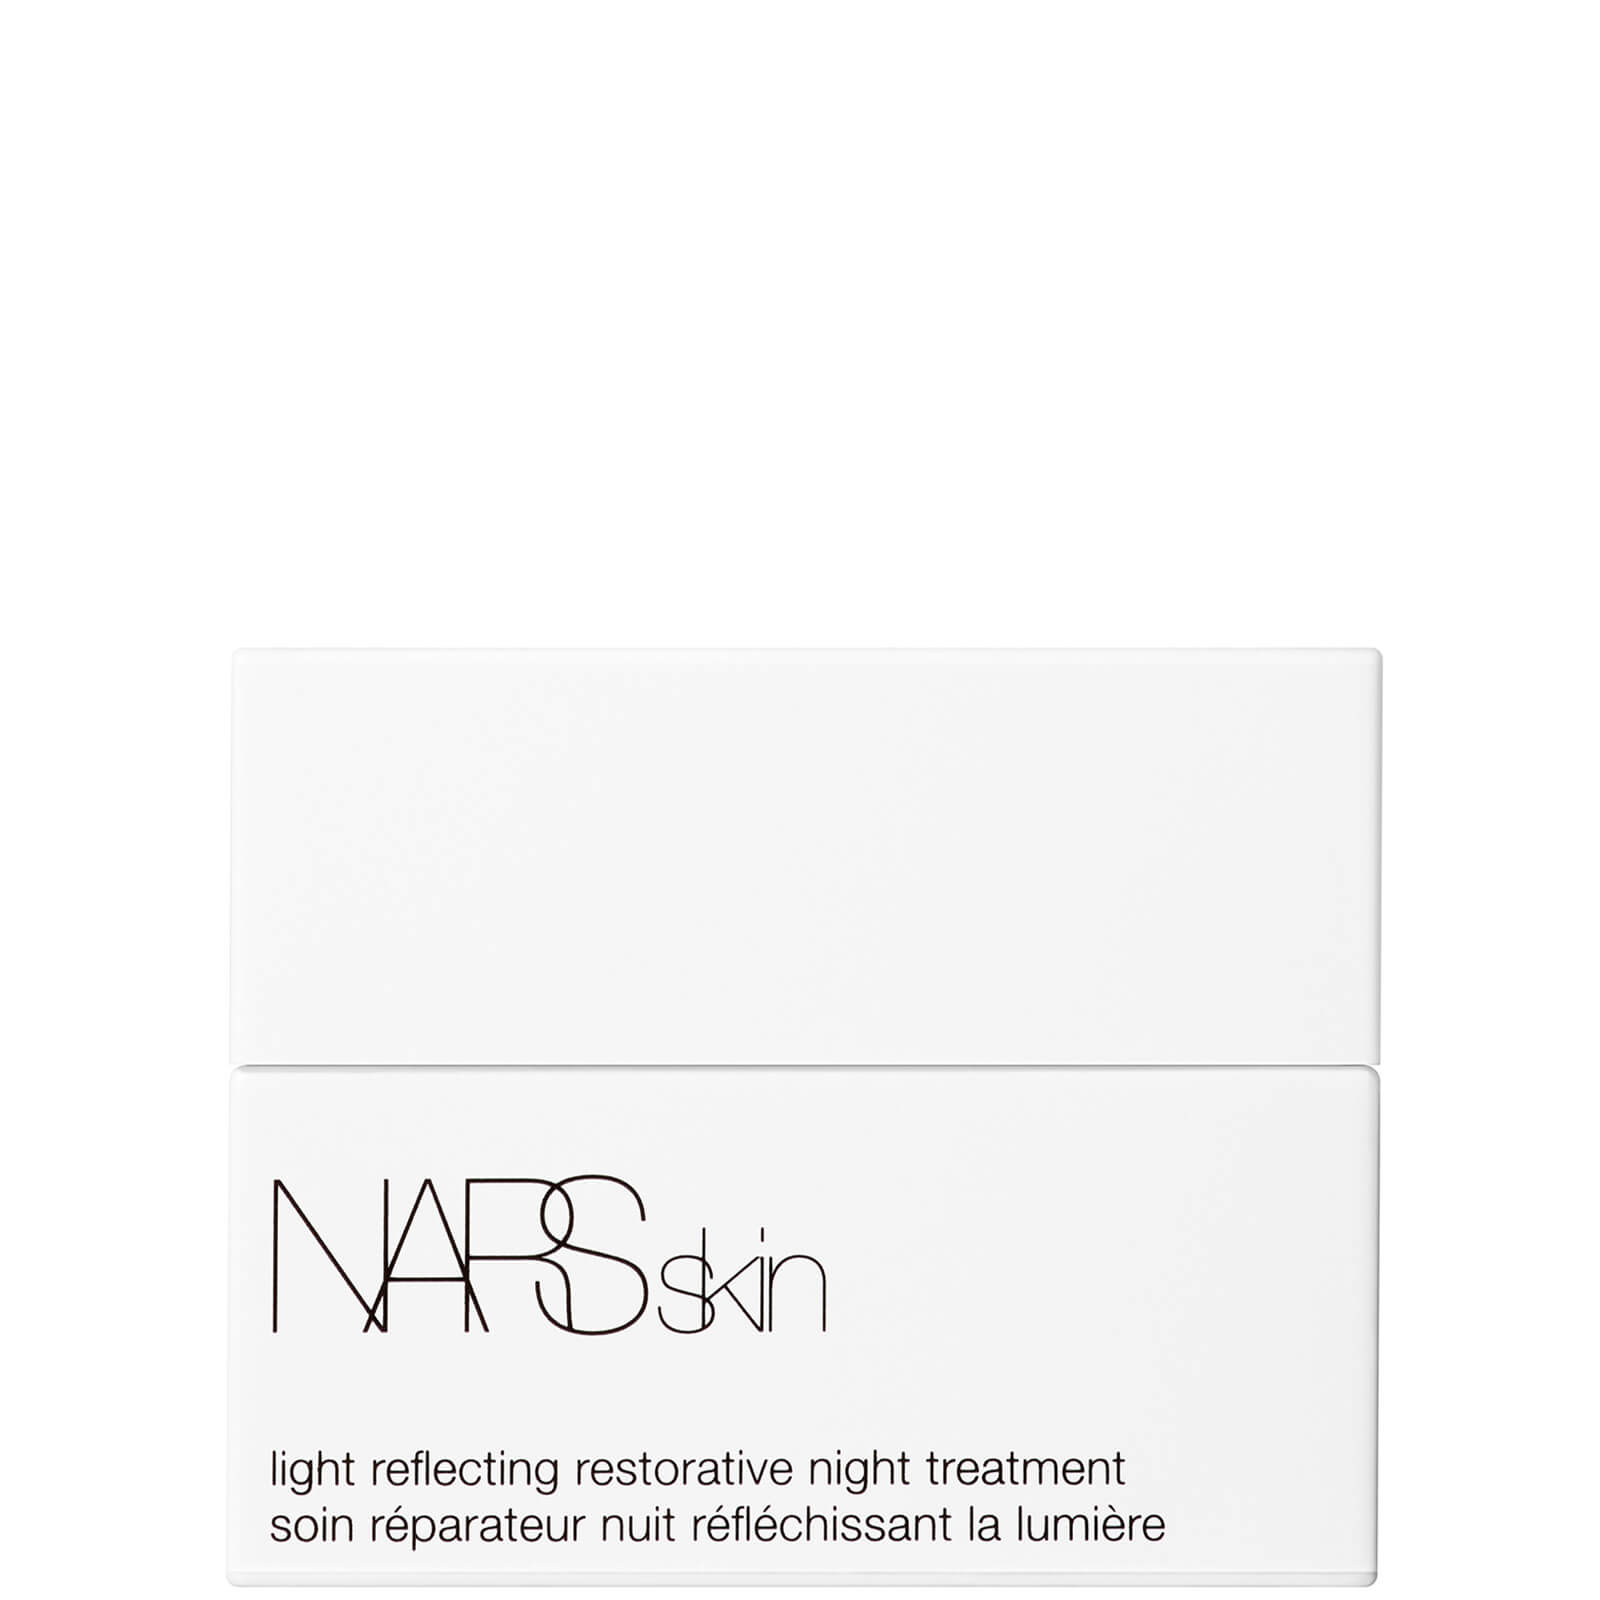 Nars Skin Light Reflecting Restorative Night Treatment 30ml